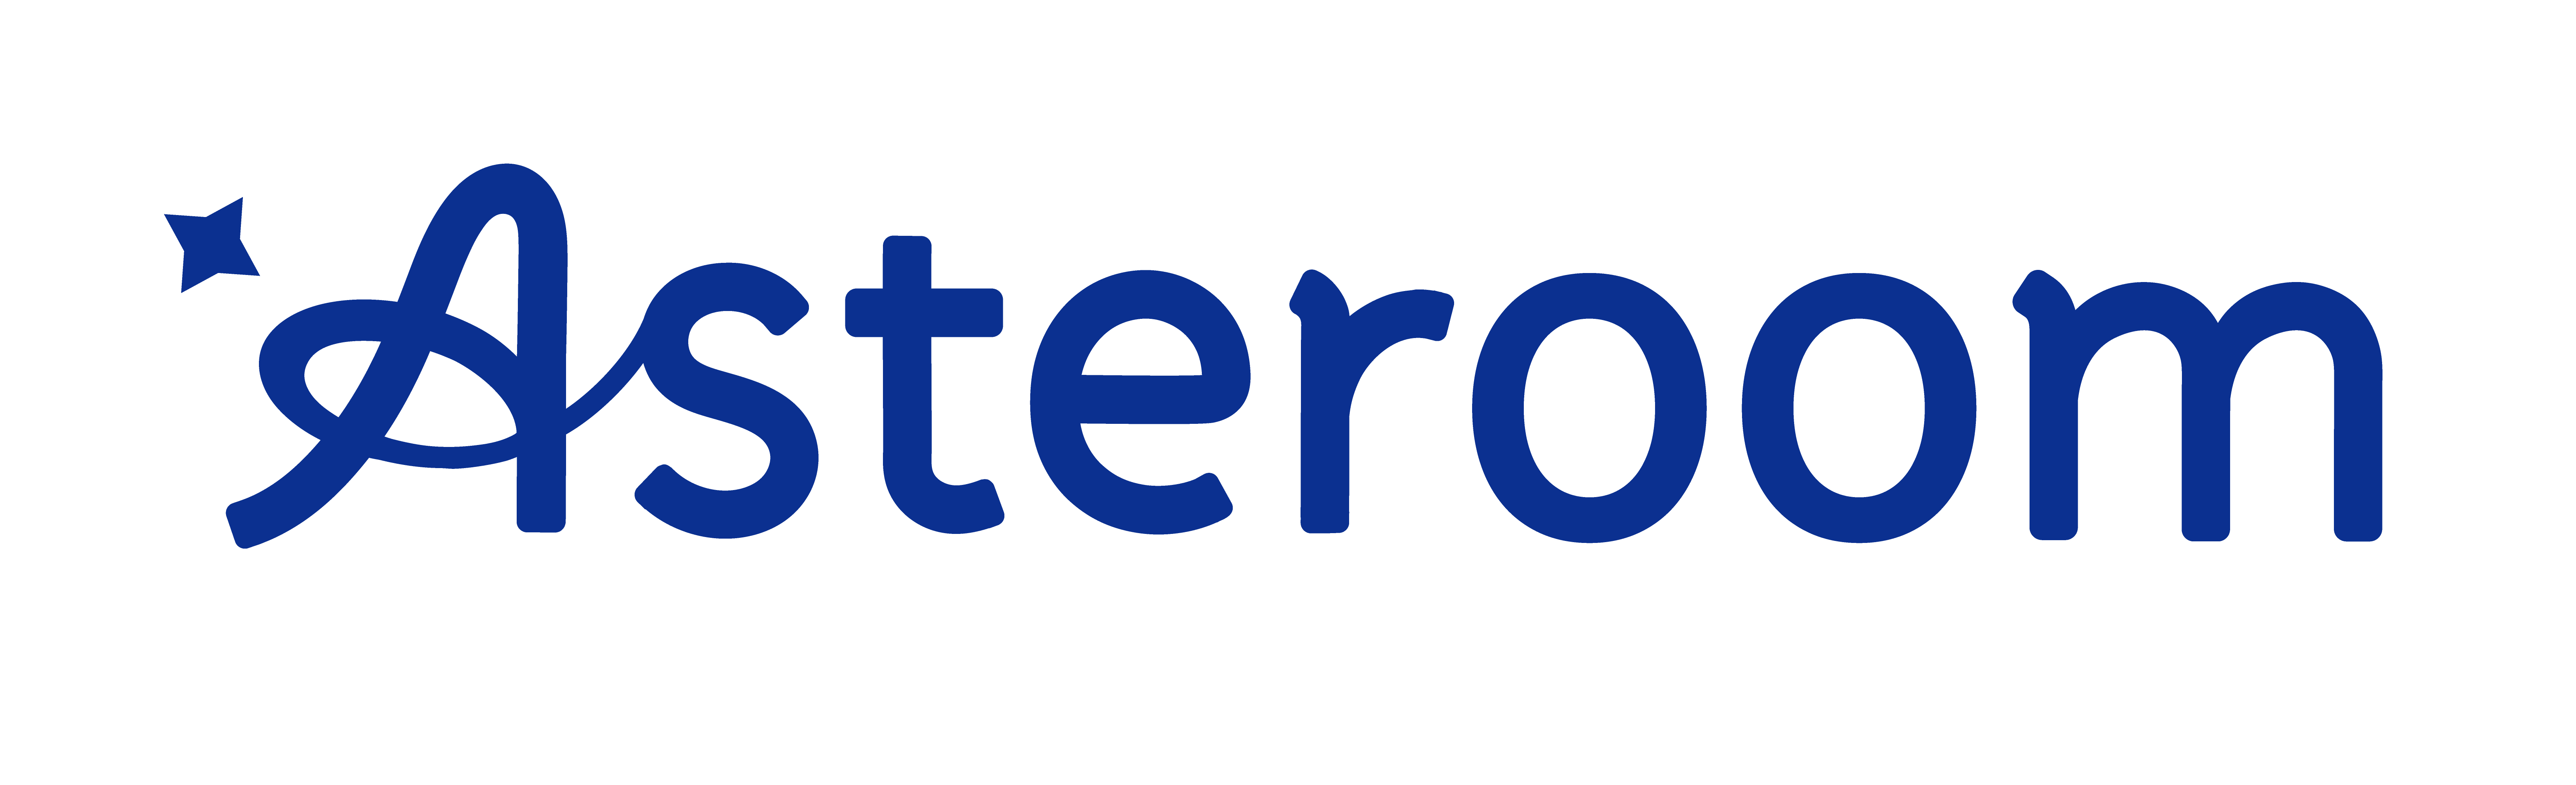 Asteroom Logo dp cropped